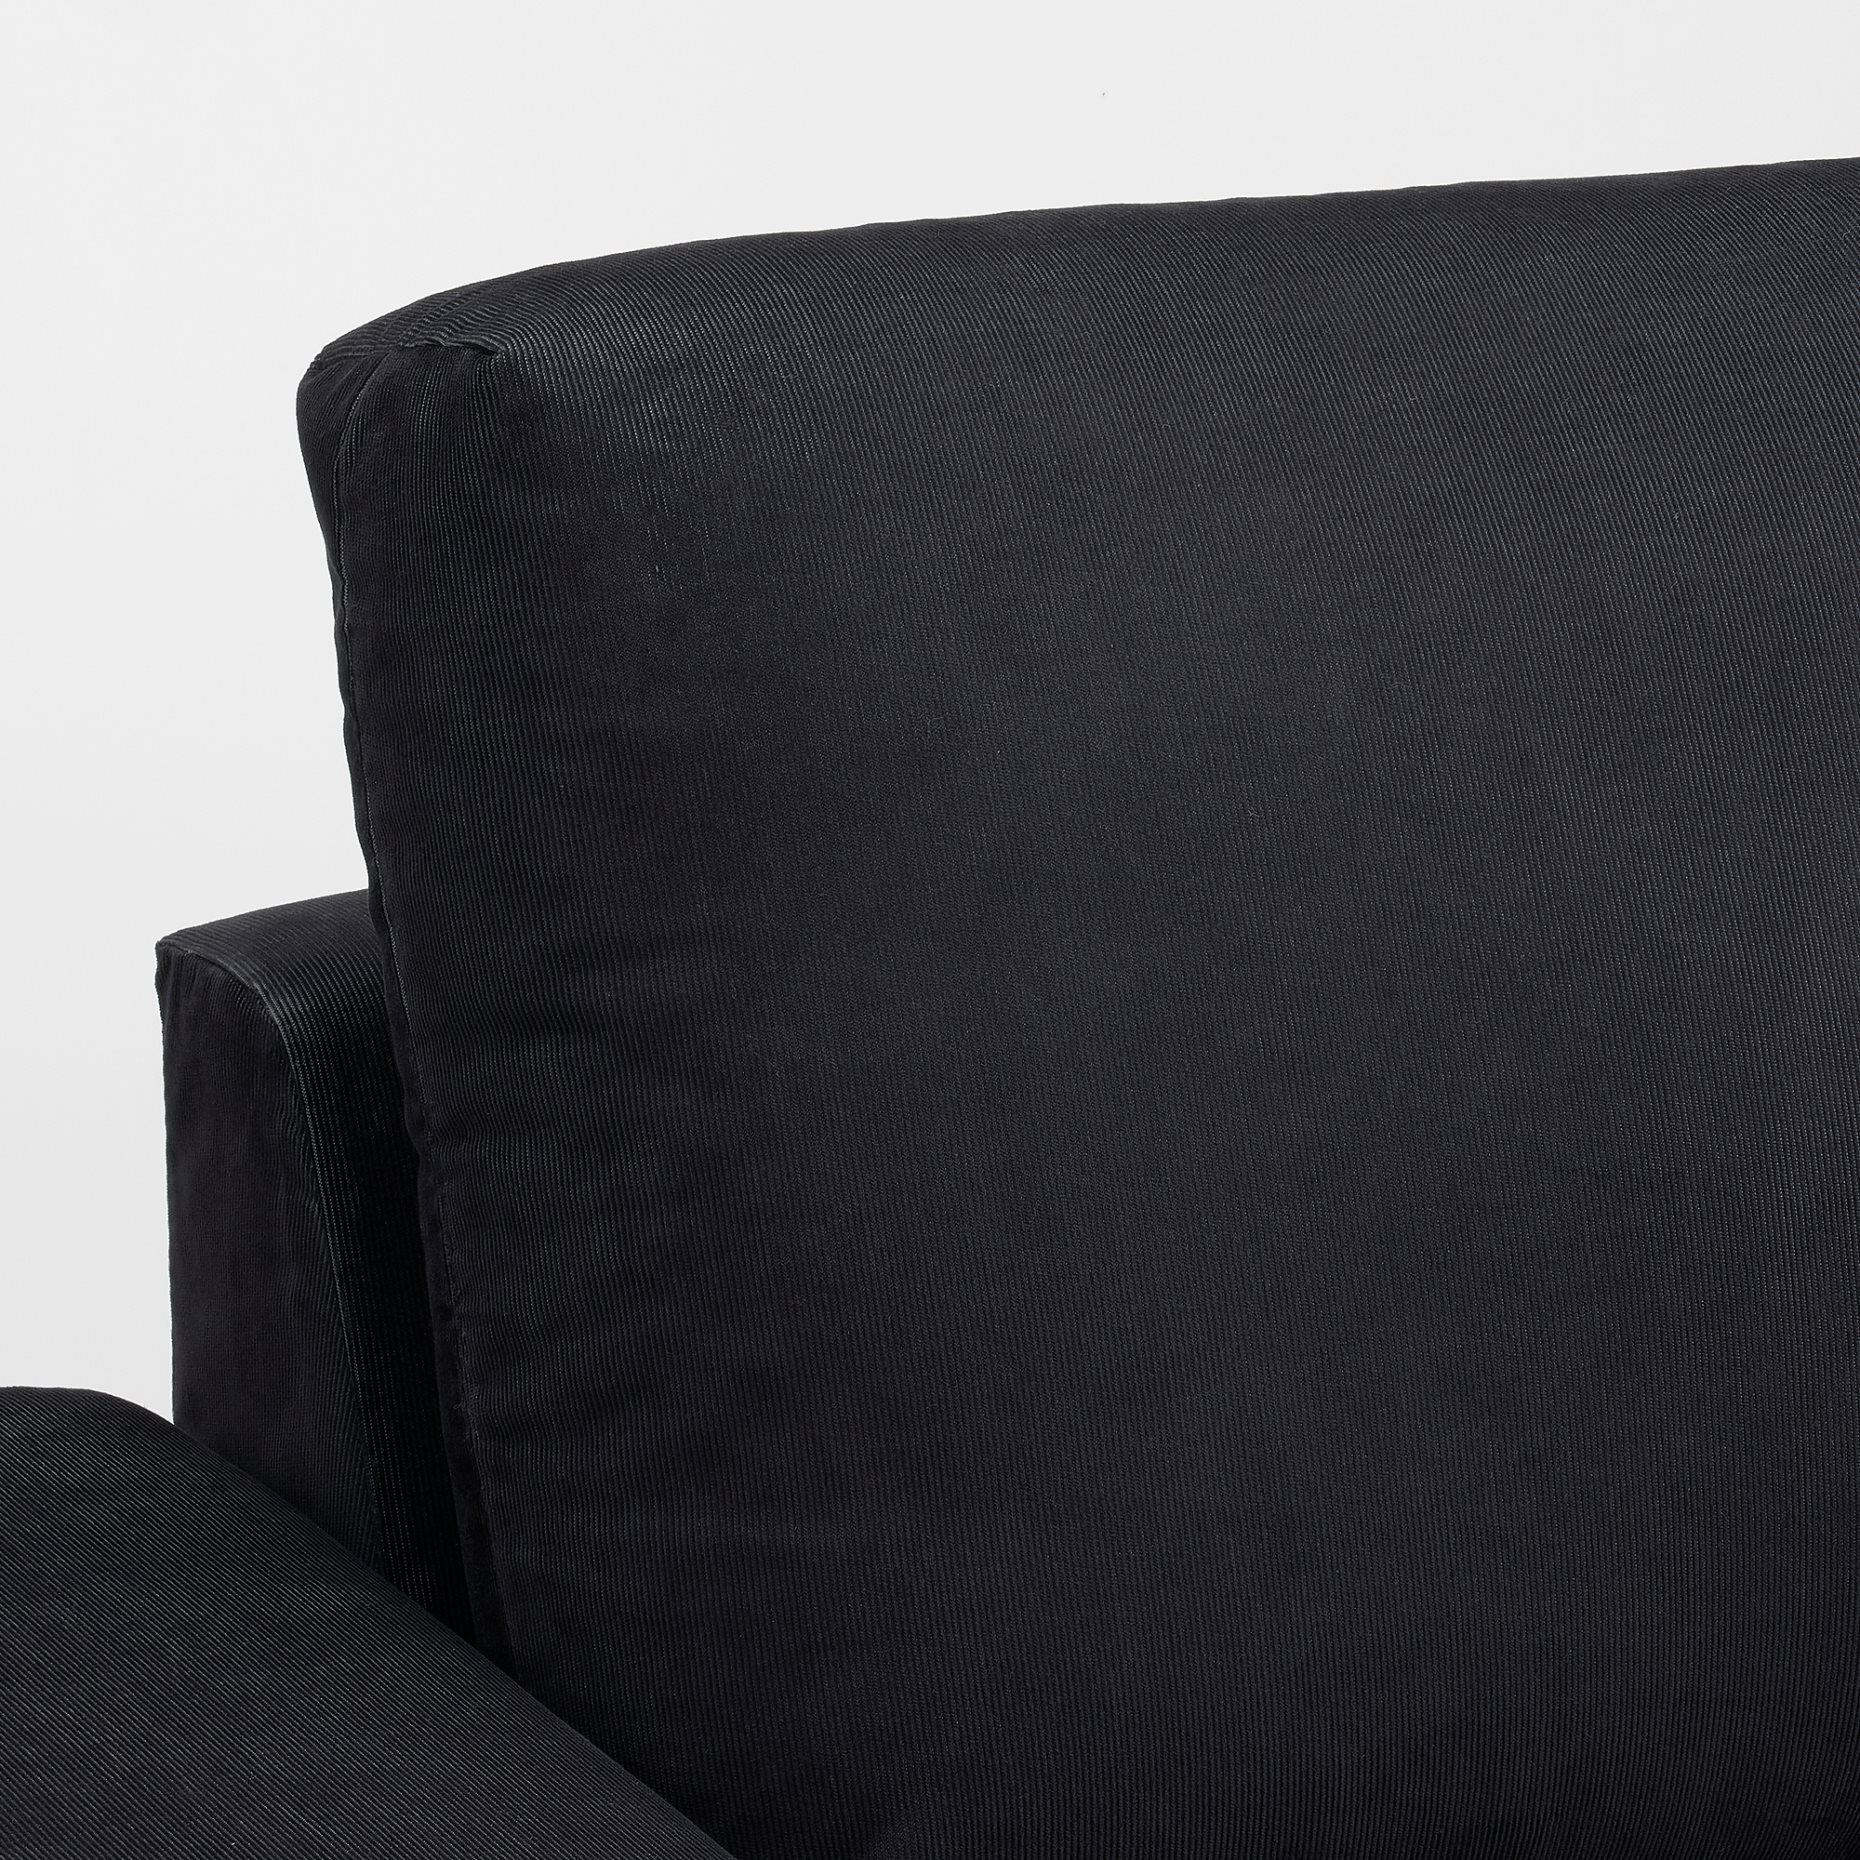 VIMLE, γωνιακός καναπές, 5θέσεων με σεζλόνγκ με πλατιά μπράτσα, 994.018.24